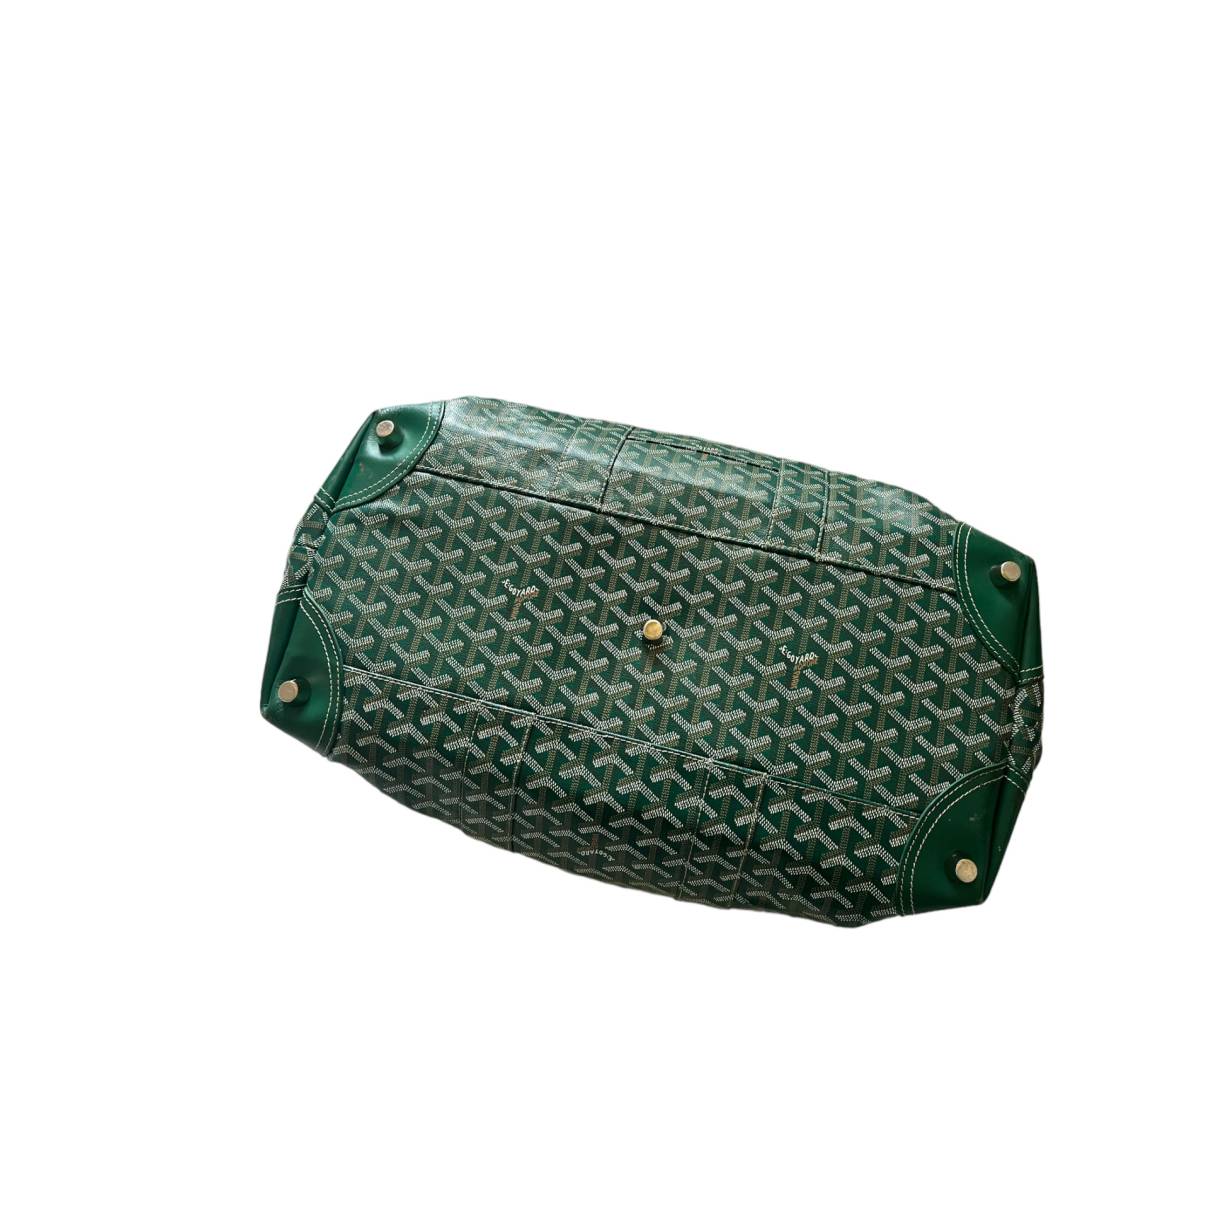 Goyard Bag in Green Color